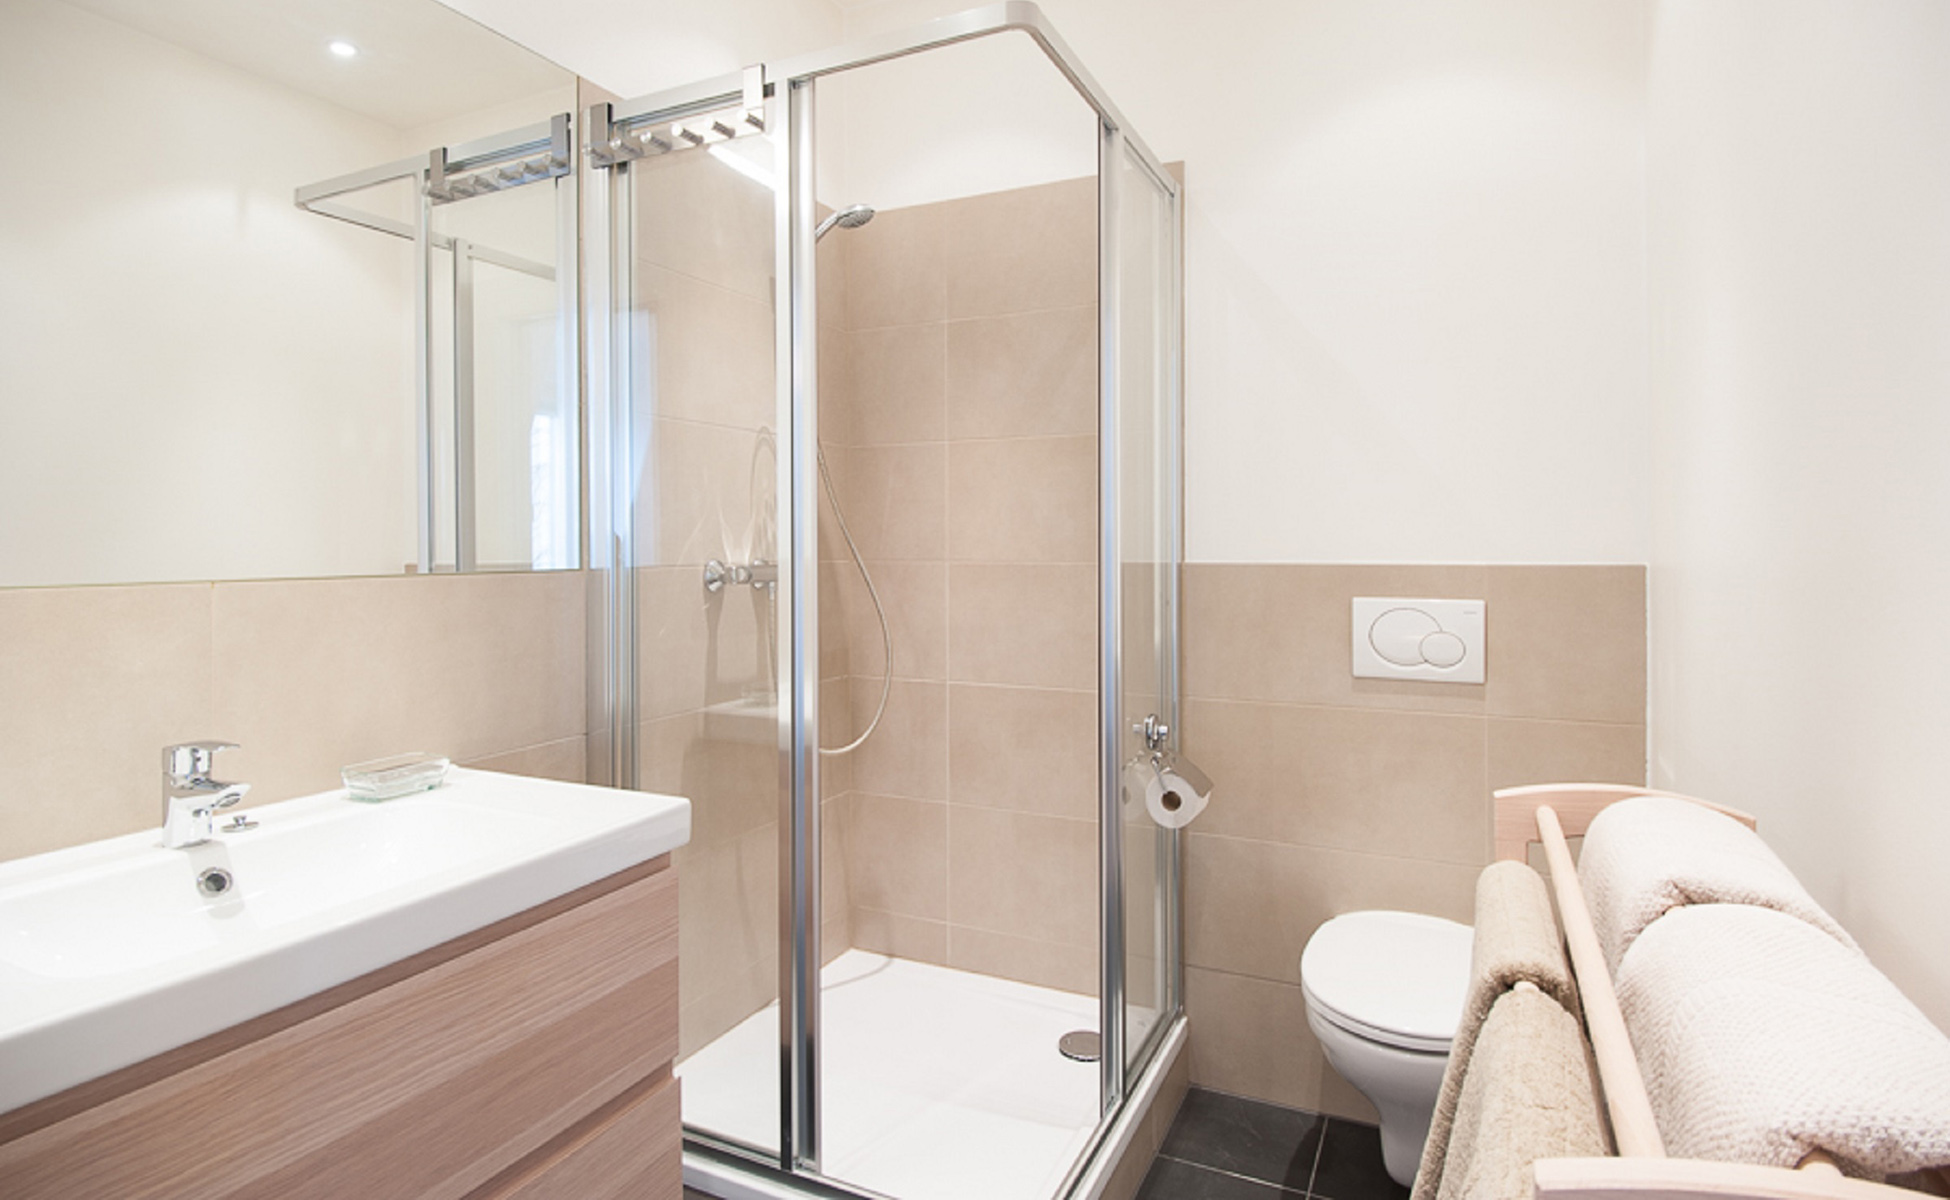 Lovelydays luxury service apartment rental - Vienna - Vienna - Castelligasse - Lovelysuite - 2 bedrooms - 2 bathrooms - Huge Double shower - 88fbfb62ce56 - Lovelydays